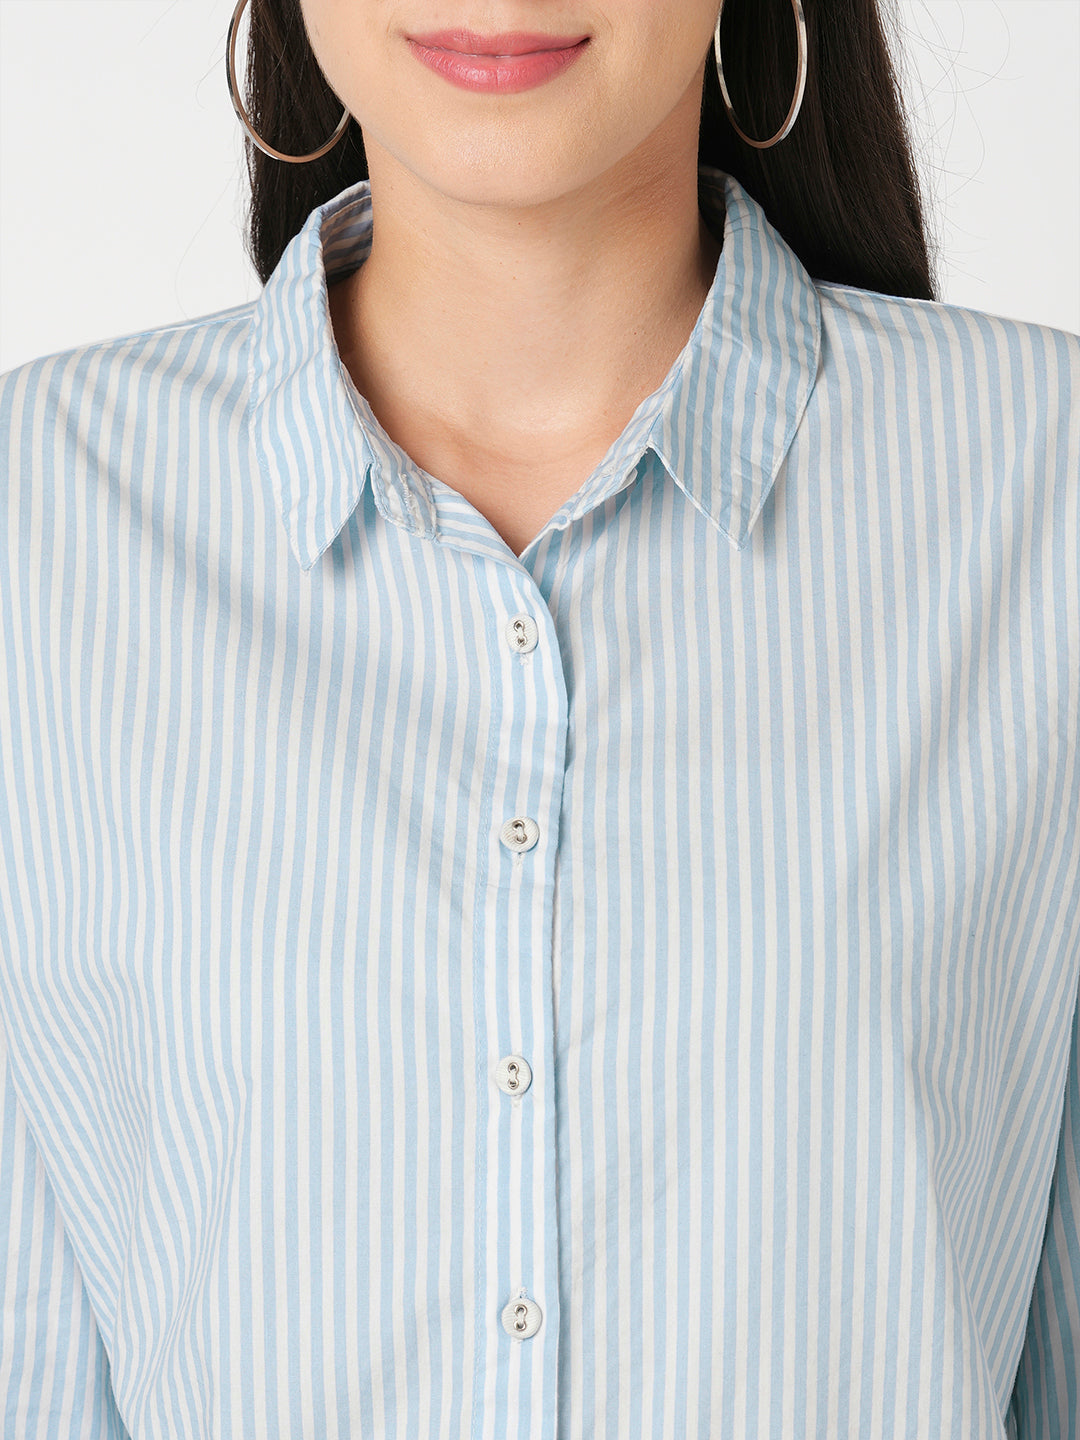 Women Slim Fit Vertical Striped Casual Shirt